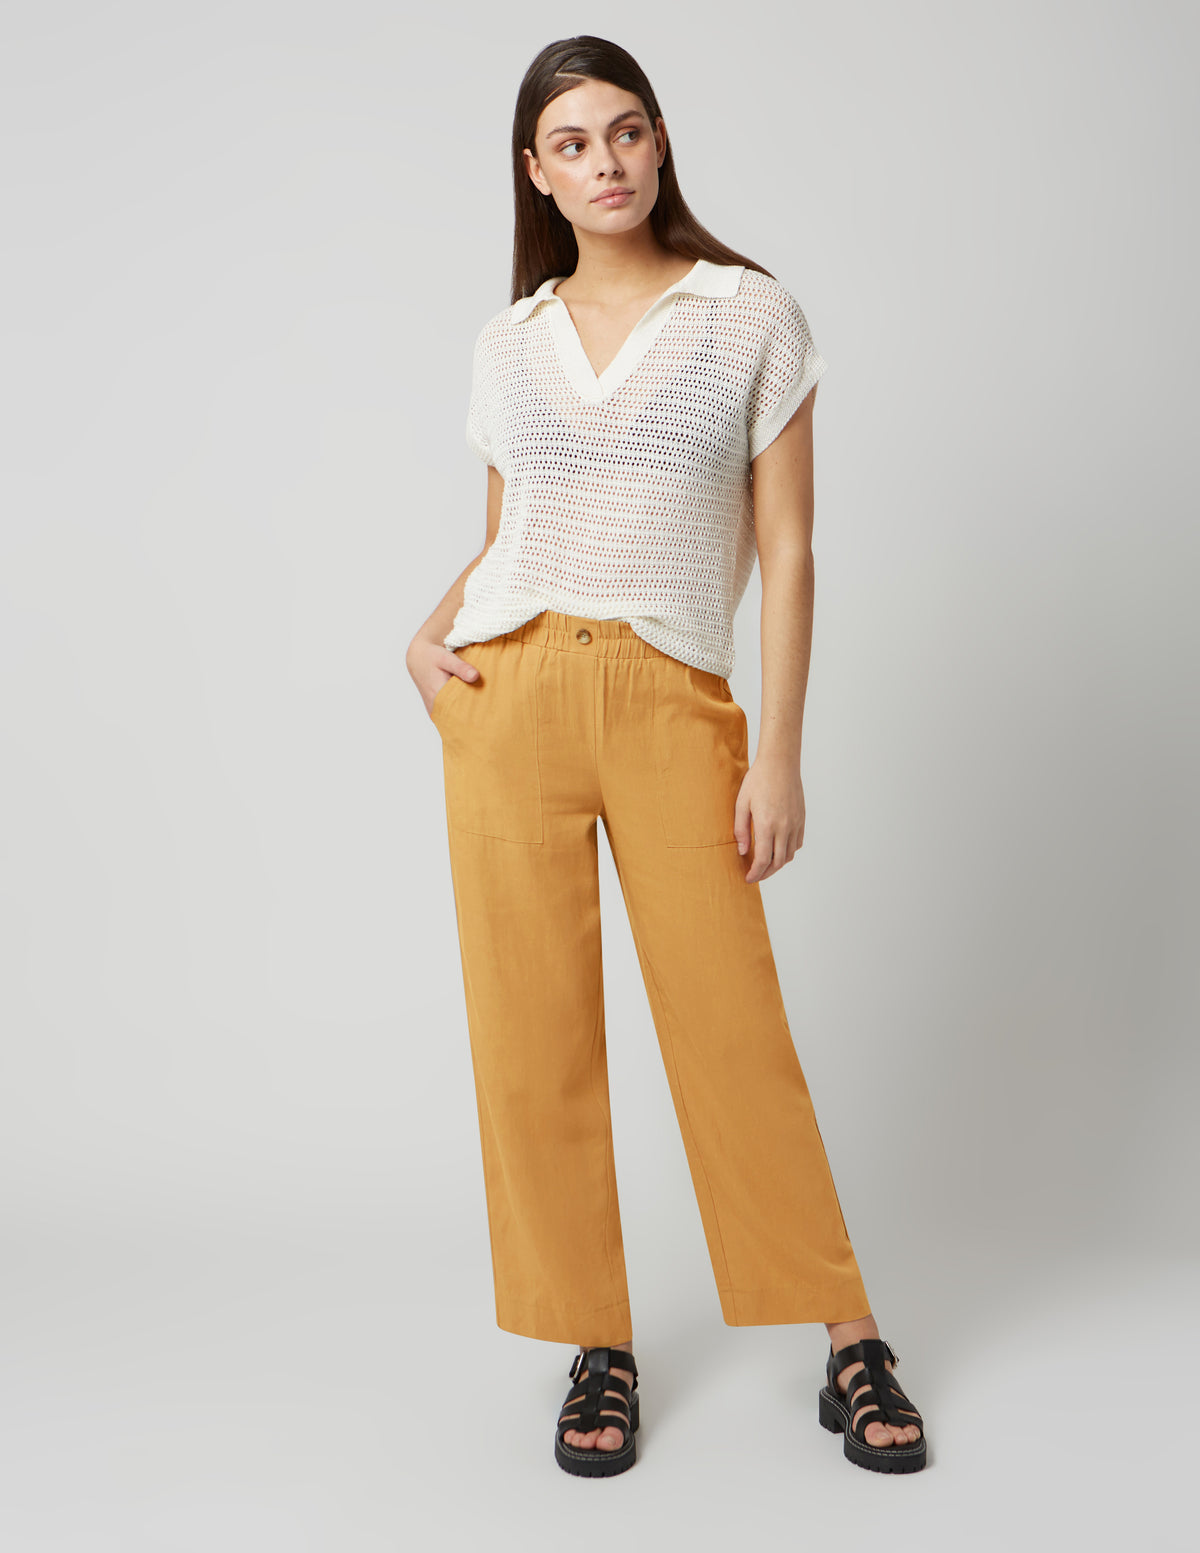 Womens Pants in 100% Organic Cotton [4374] - £12.00 : Cambridge